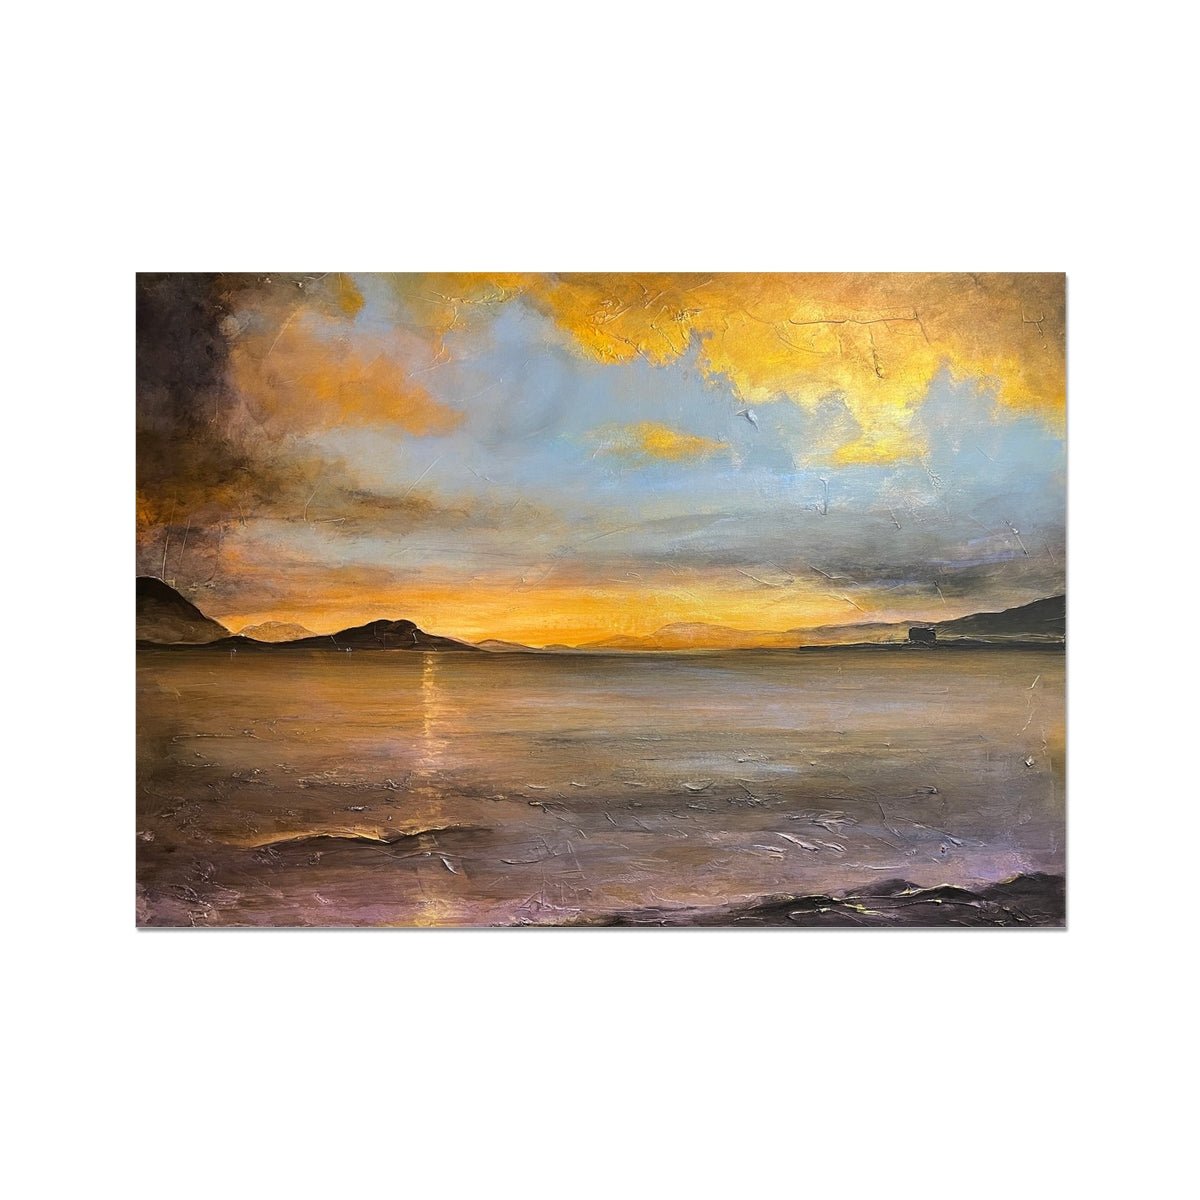 Loch Linnhe Sunset Painting | Fine Art Prints From Scotland-Unframed Prints-Scottish Lochs & Mountains Art Gallery-A2 Landscape-Paintings, Prints, Homeware, Art Gifts From Scotland By Scottish Artist Kevin Hunter